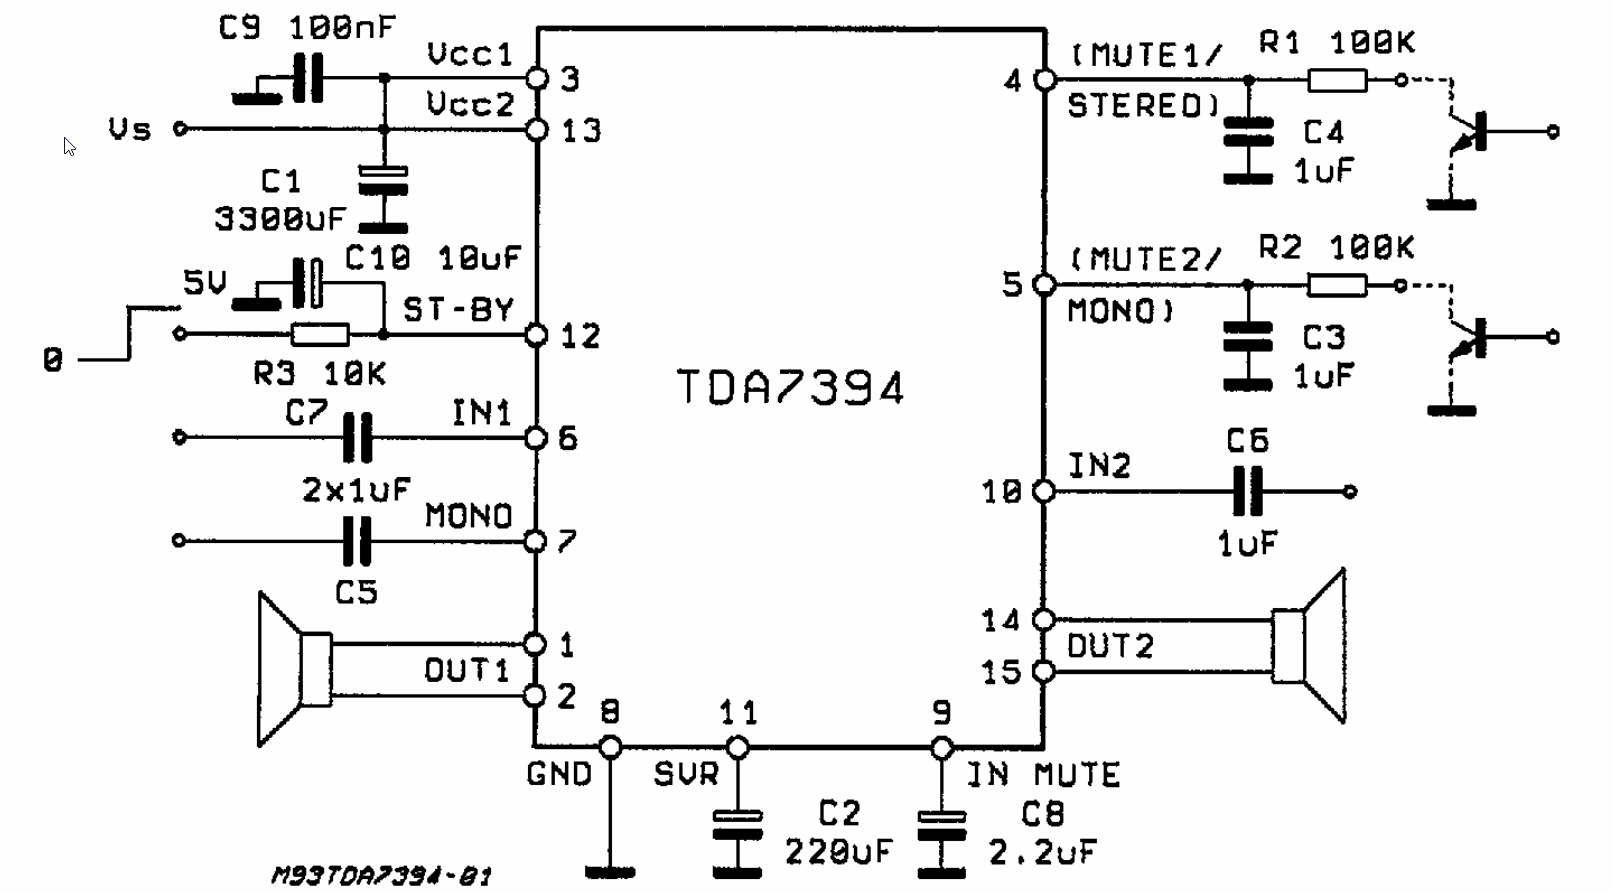 Tda4866 характеристики схема подключения